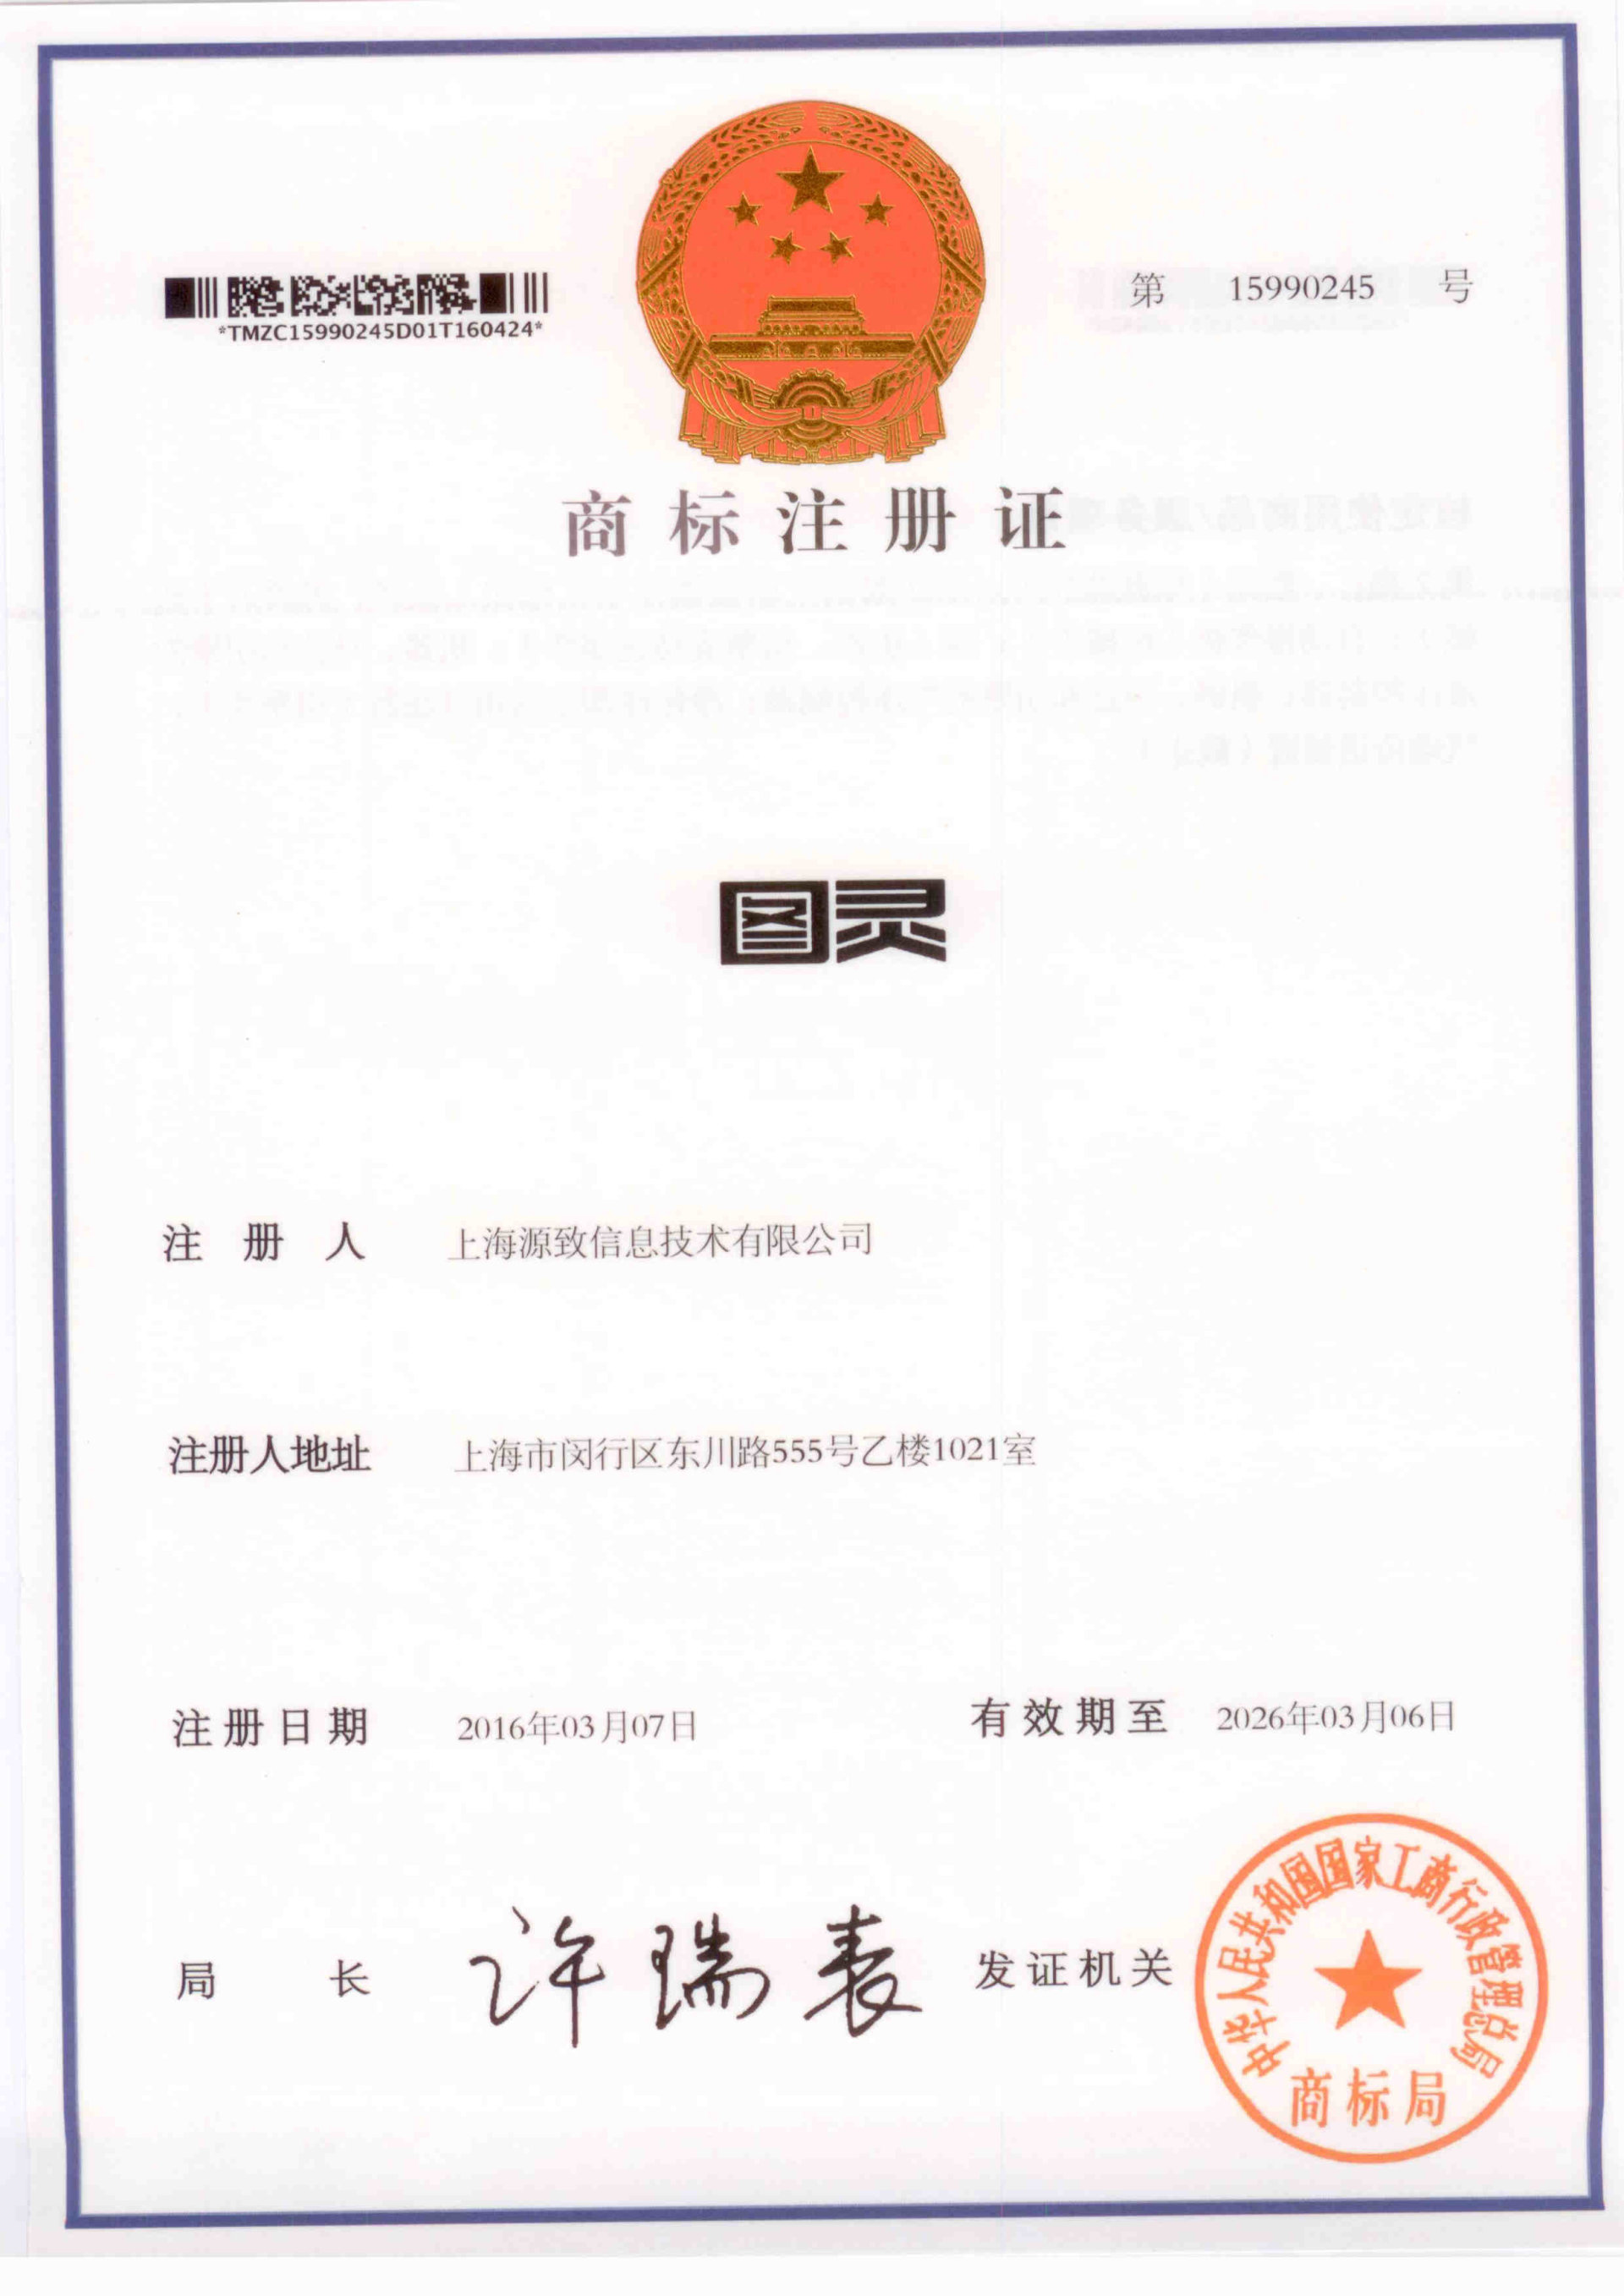 TURIN Trademark Registration Certificate